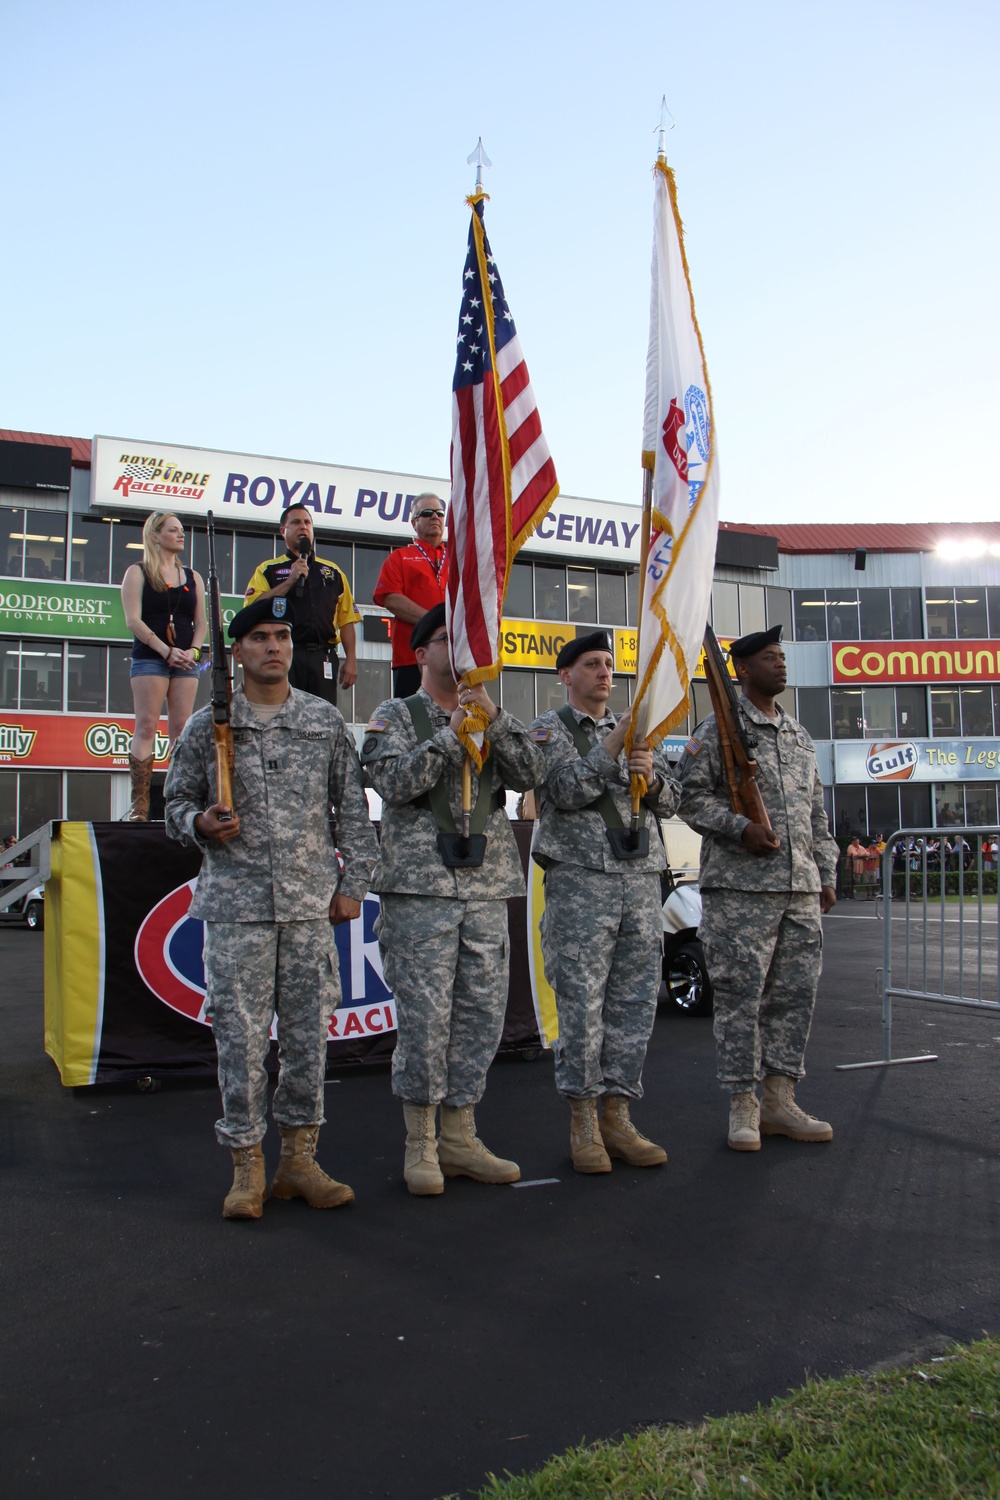 Army troops help focus national pride at racing event